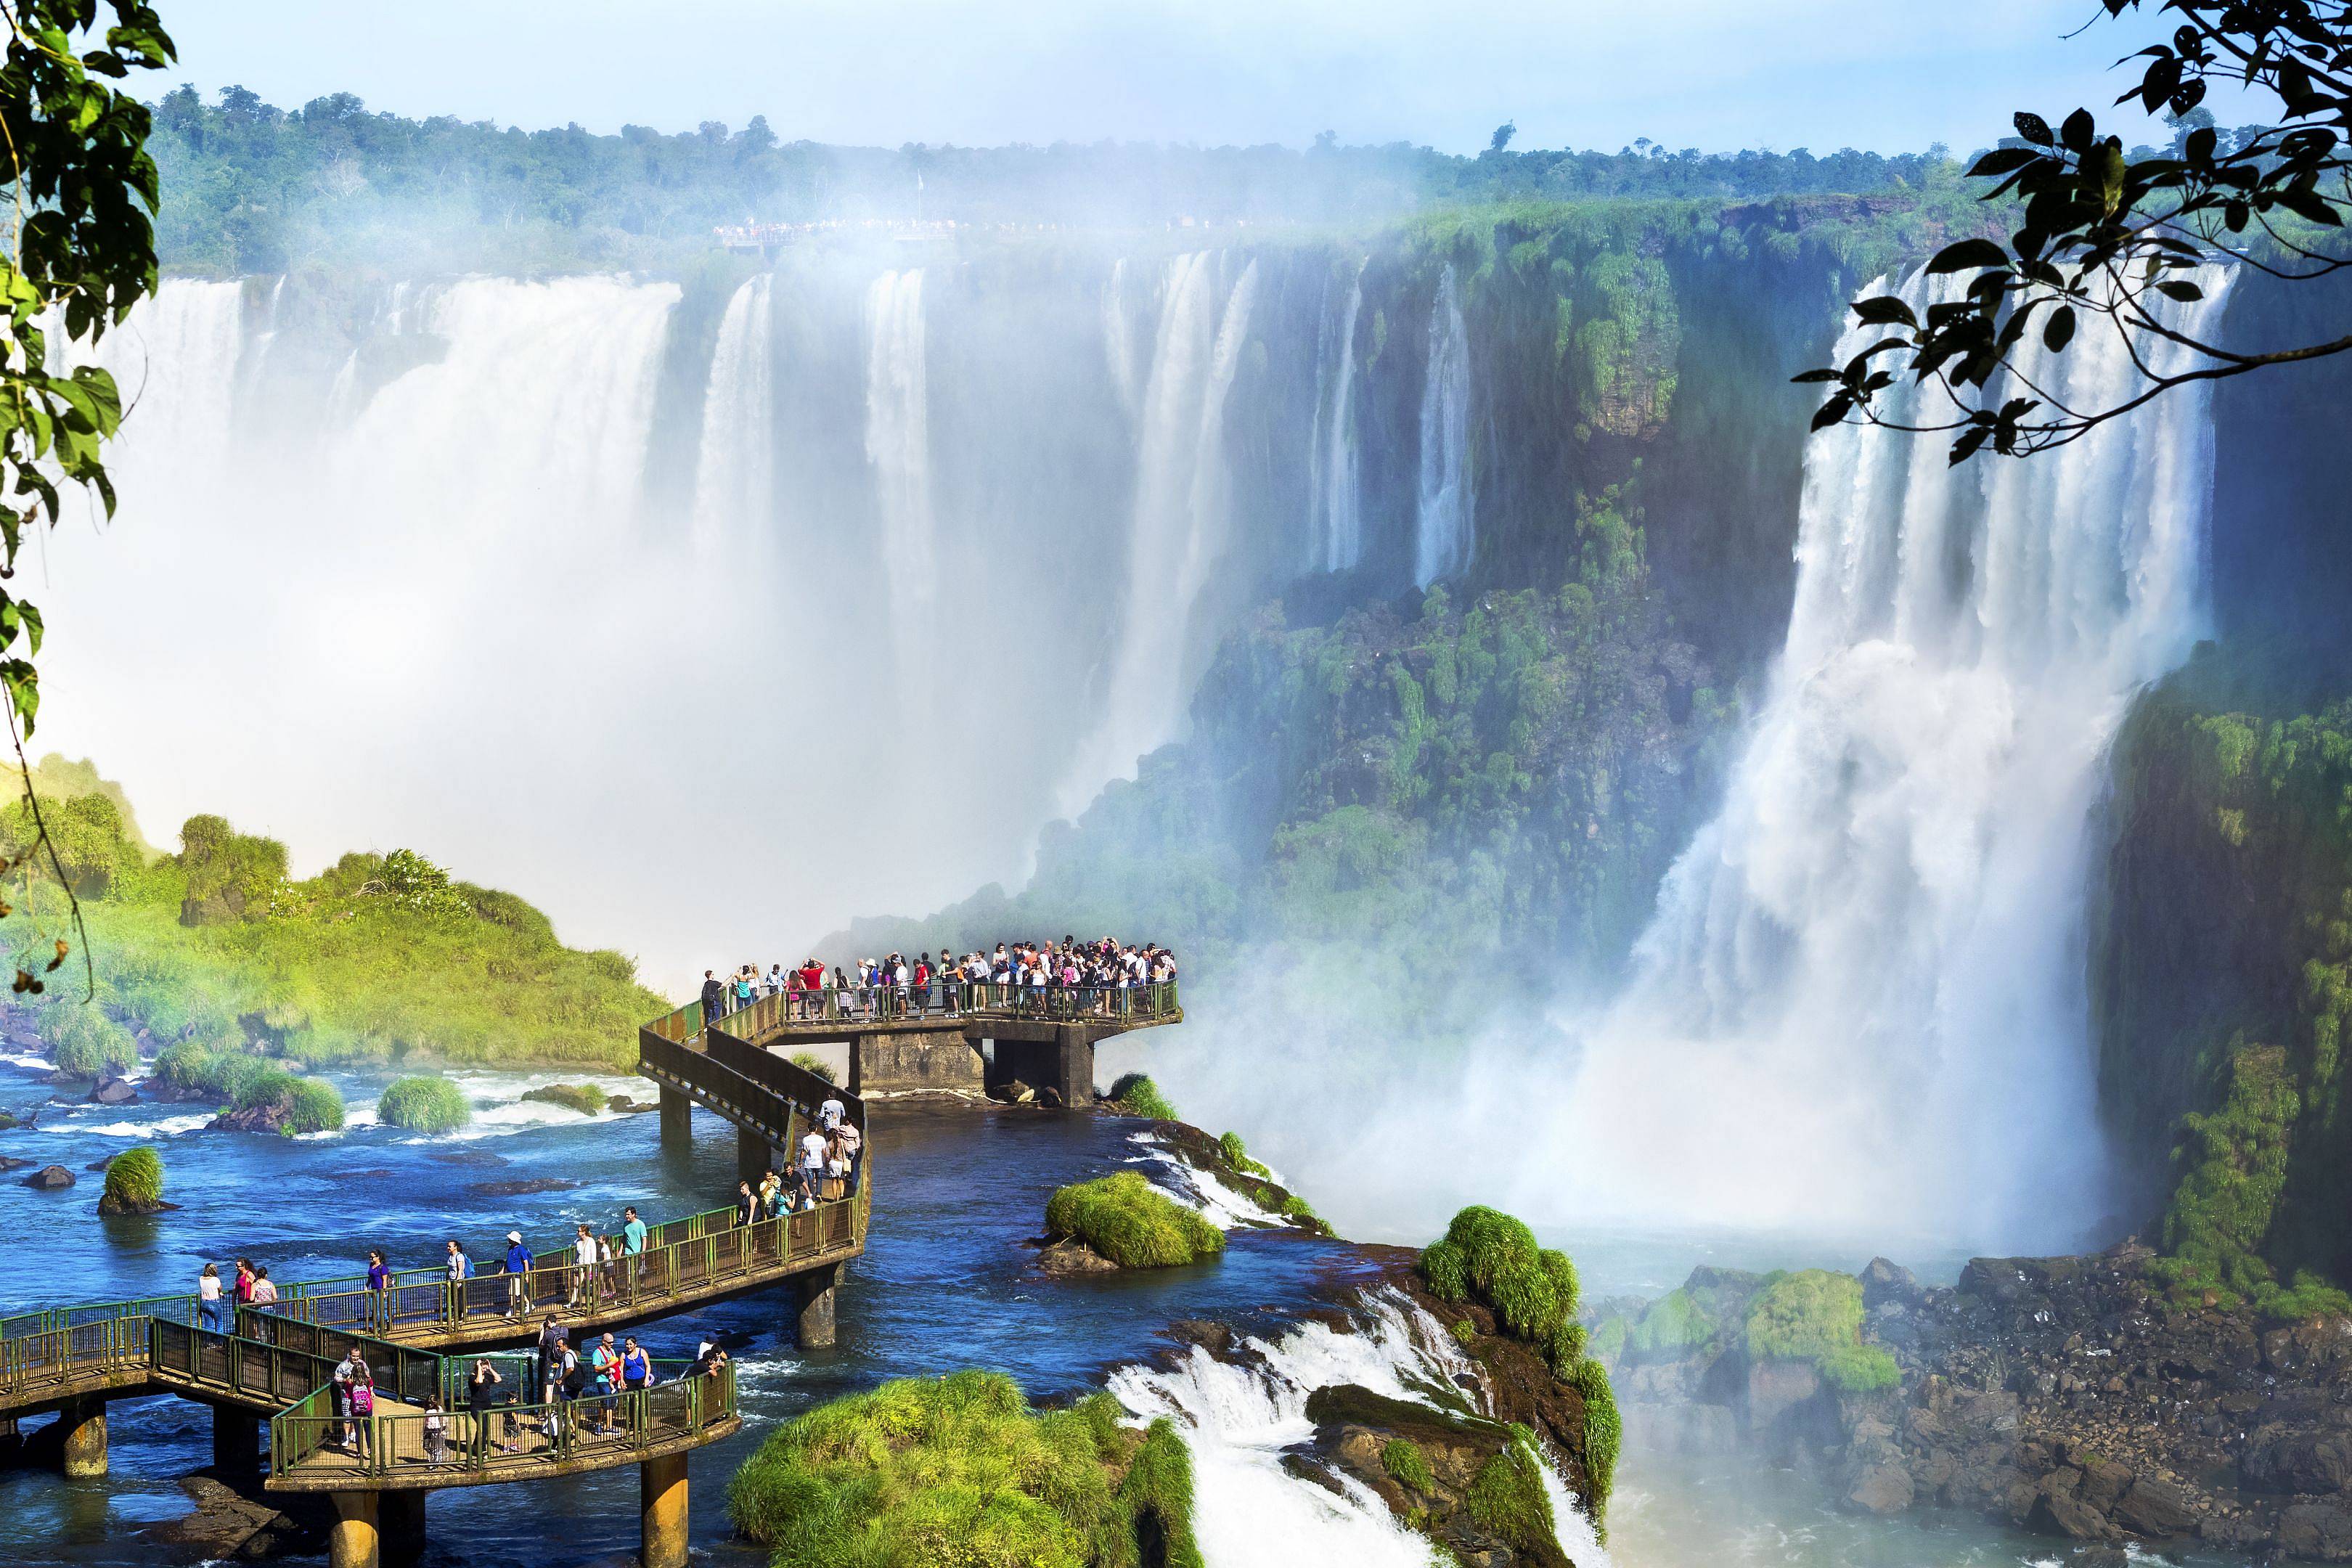  Rumbo al maravilloso Iguazú